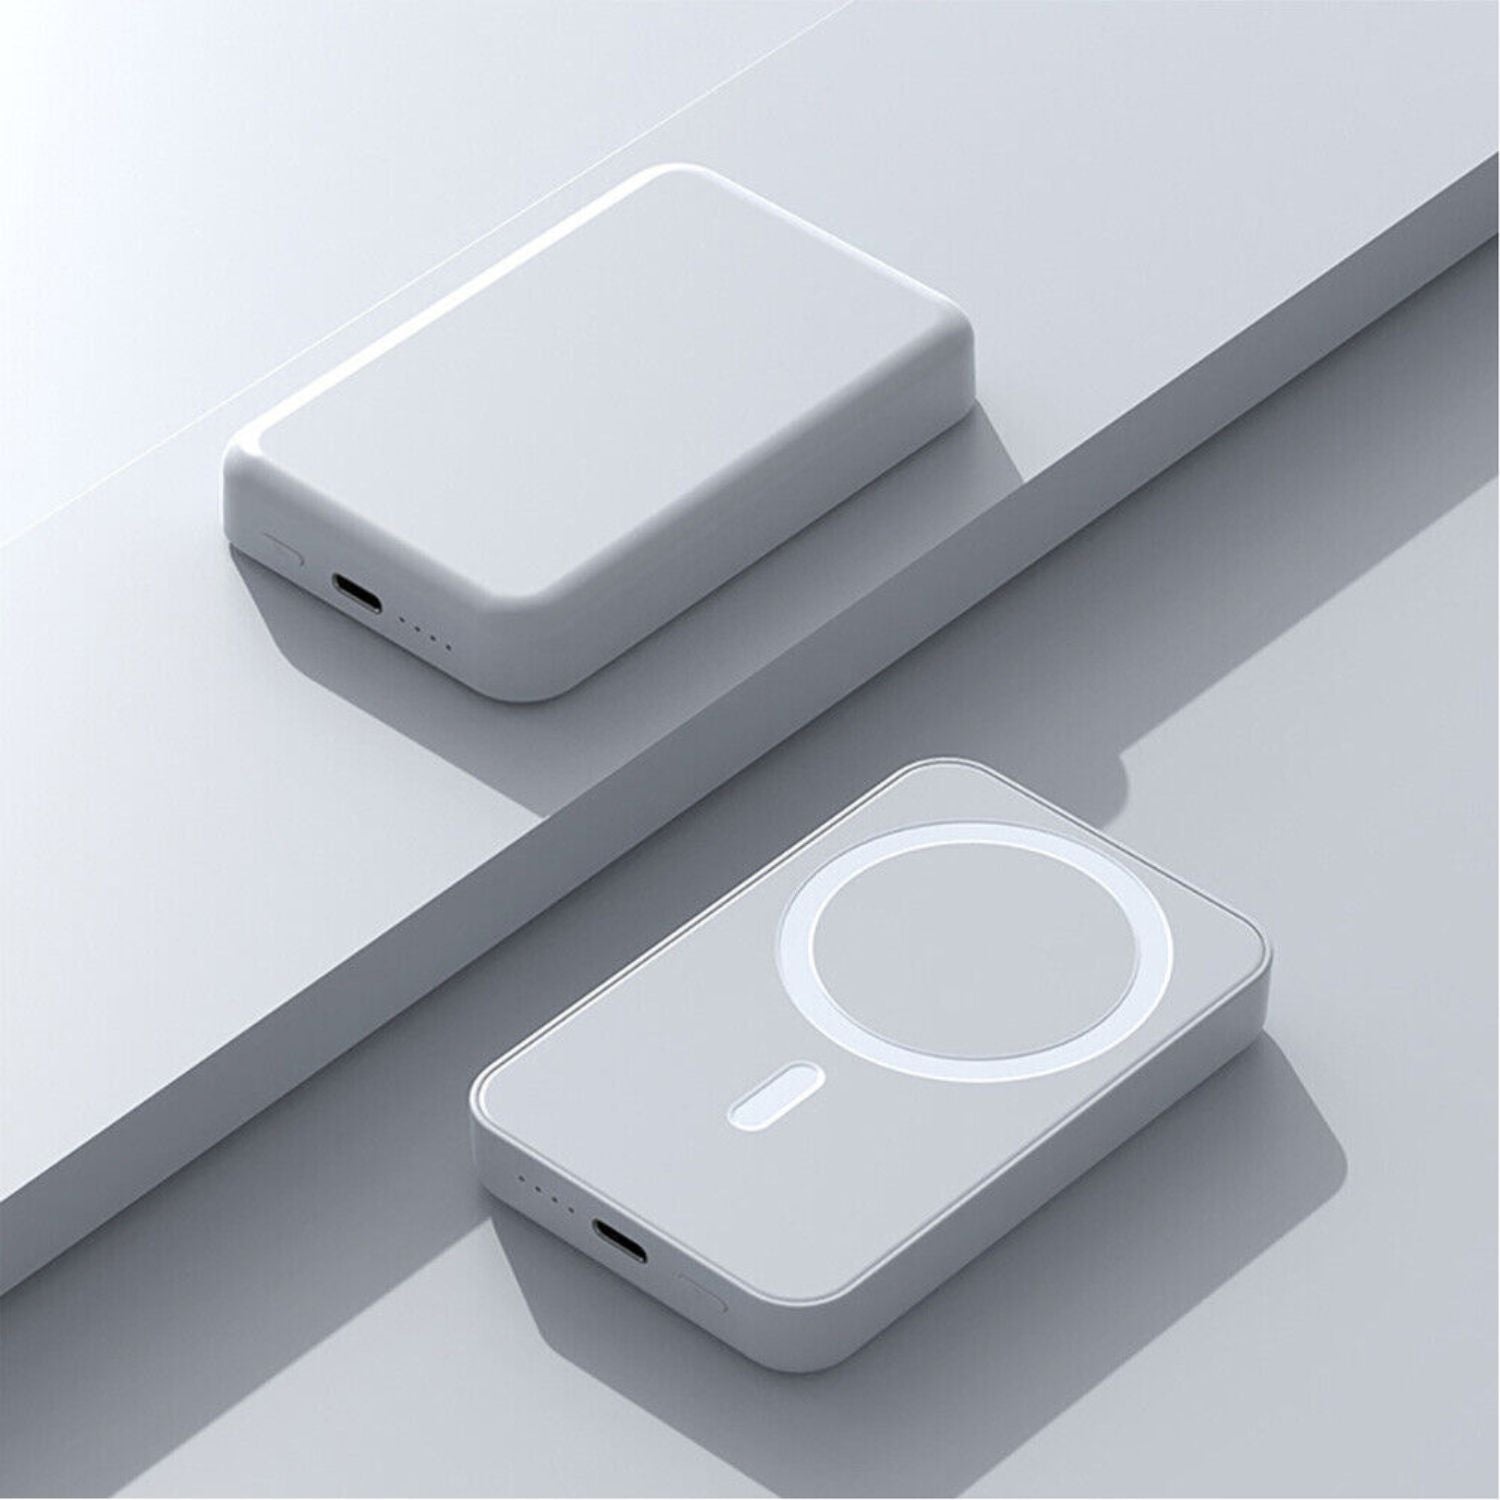 ospolt-wireless-charging-accessories